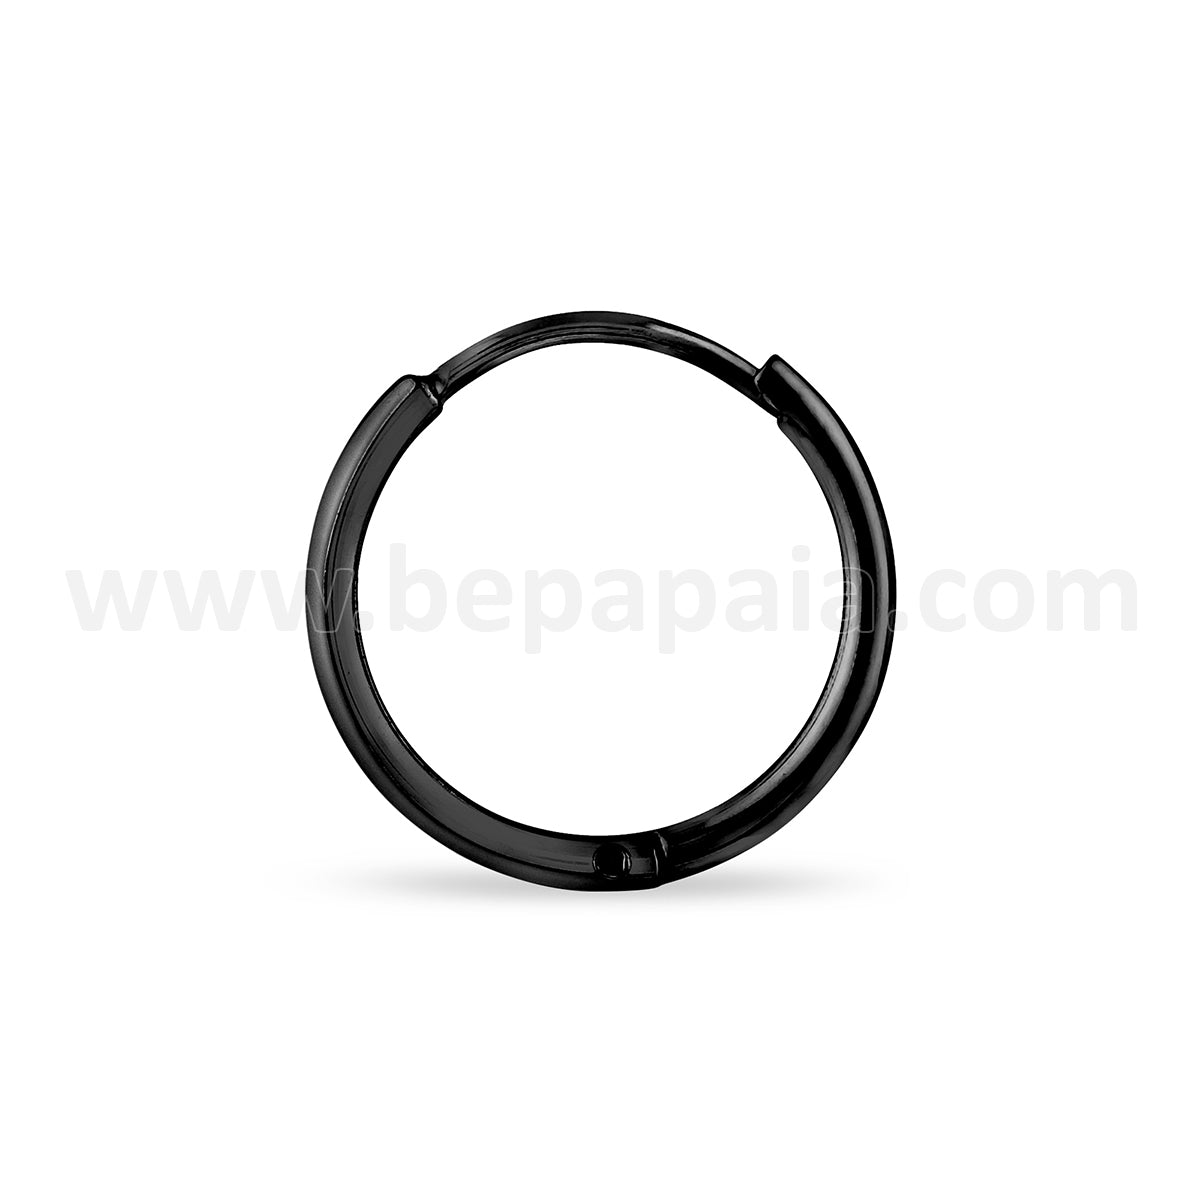 Stainless steel hoop earring black colour 1.2mm